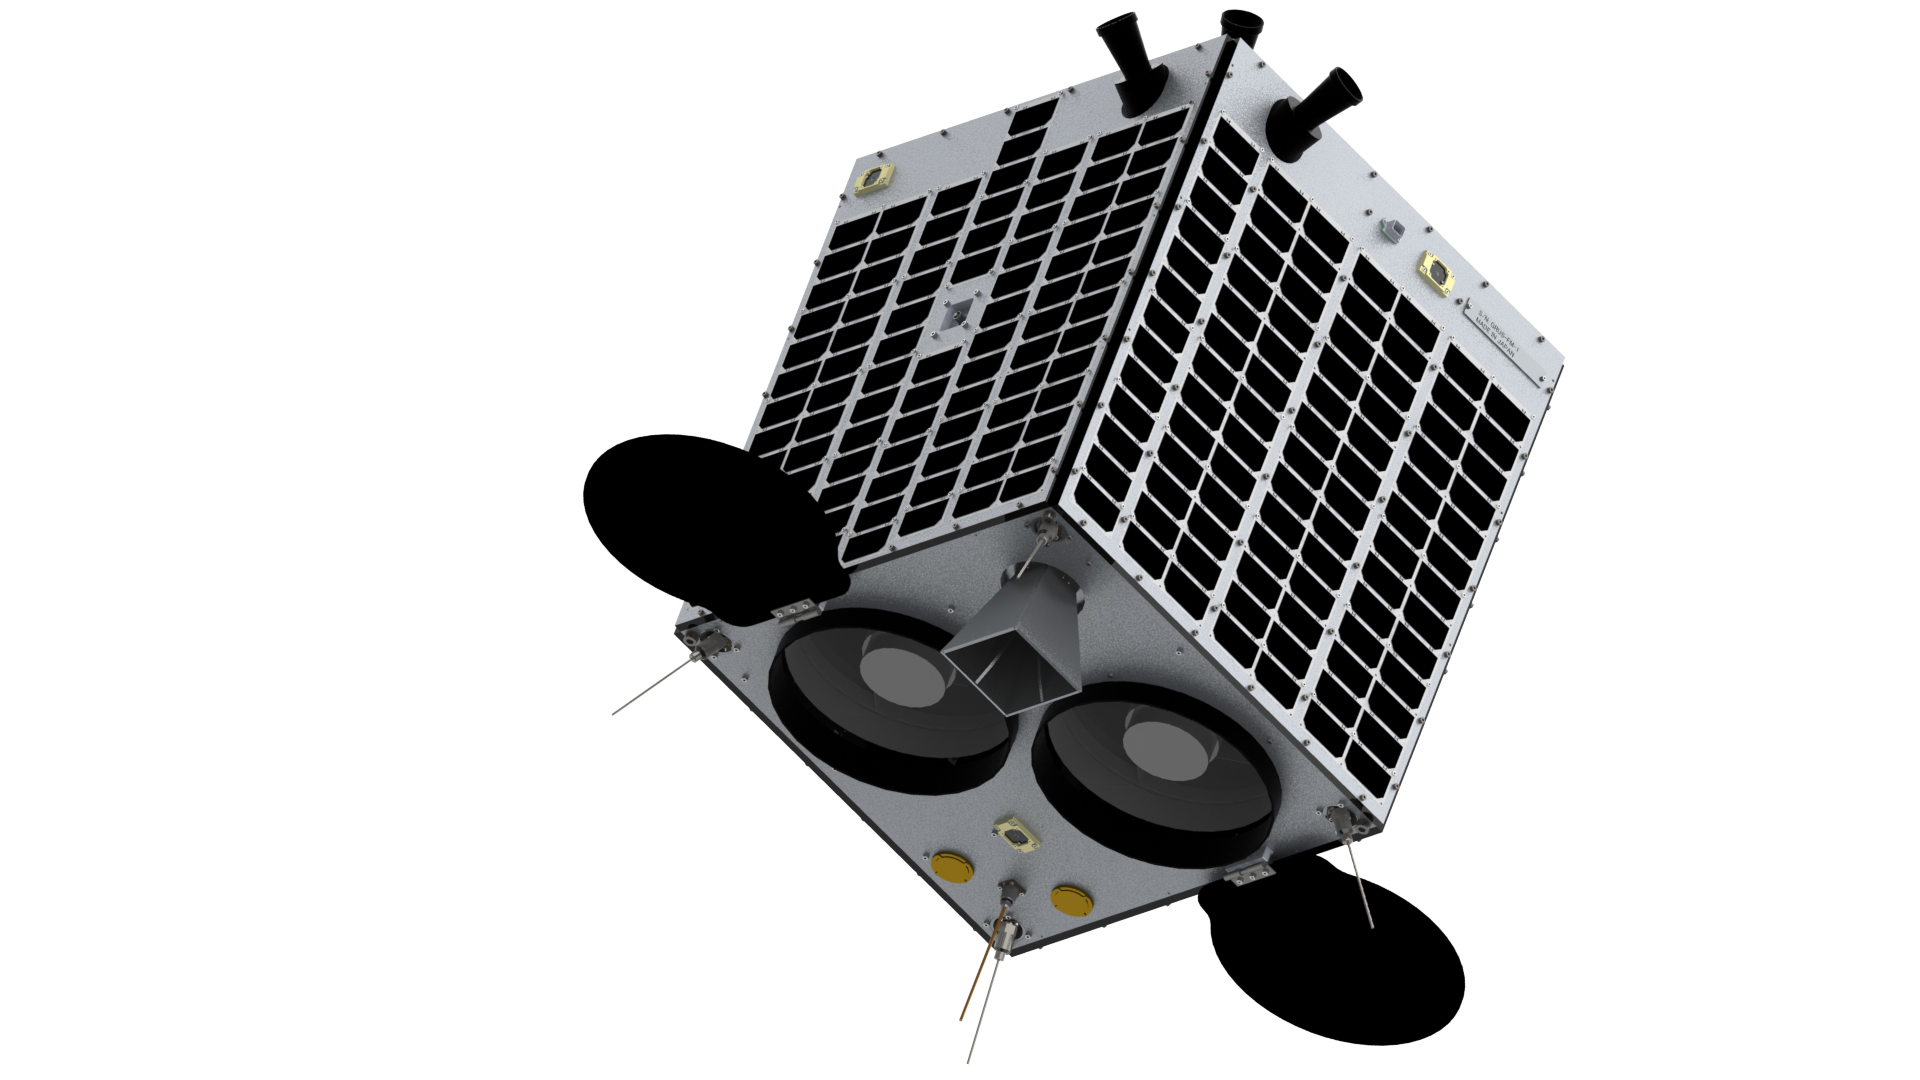 GRUS satellite illustration